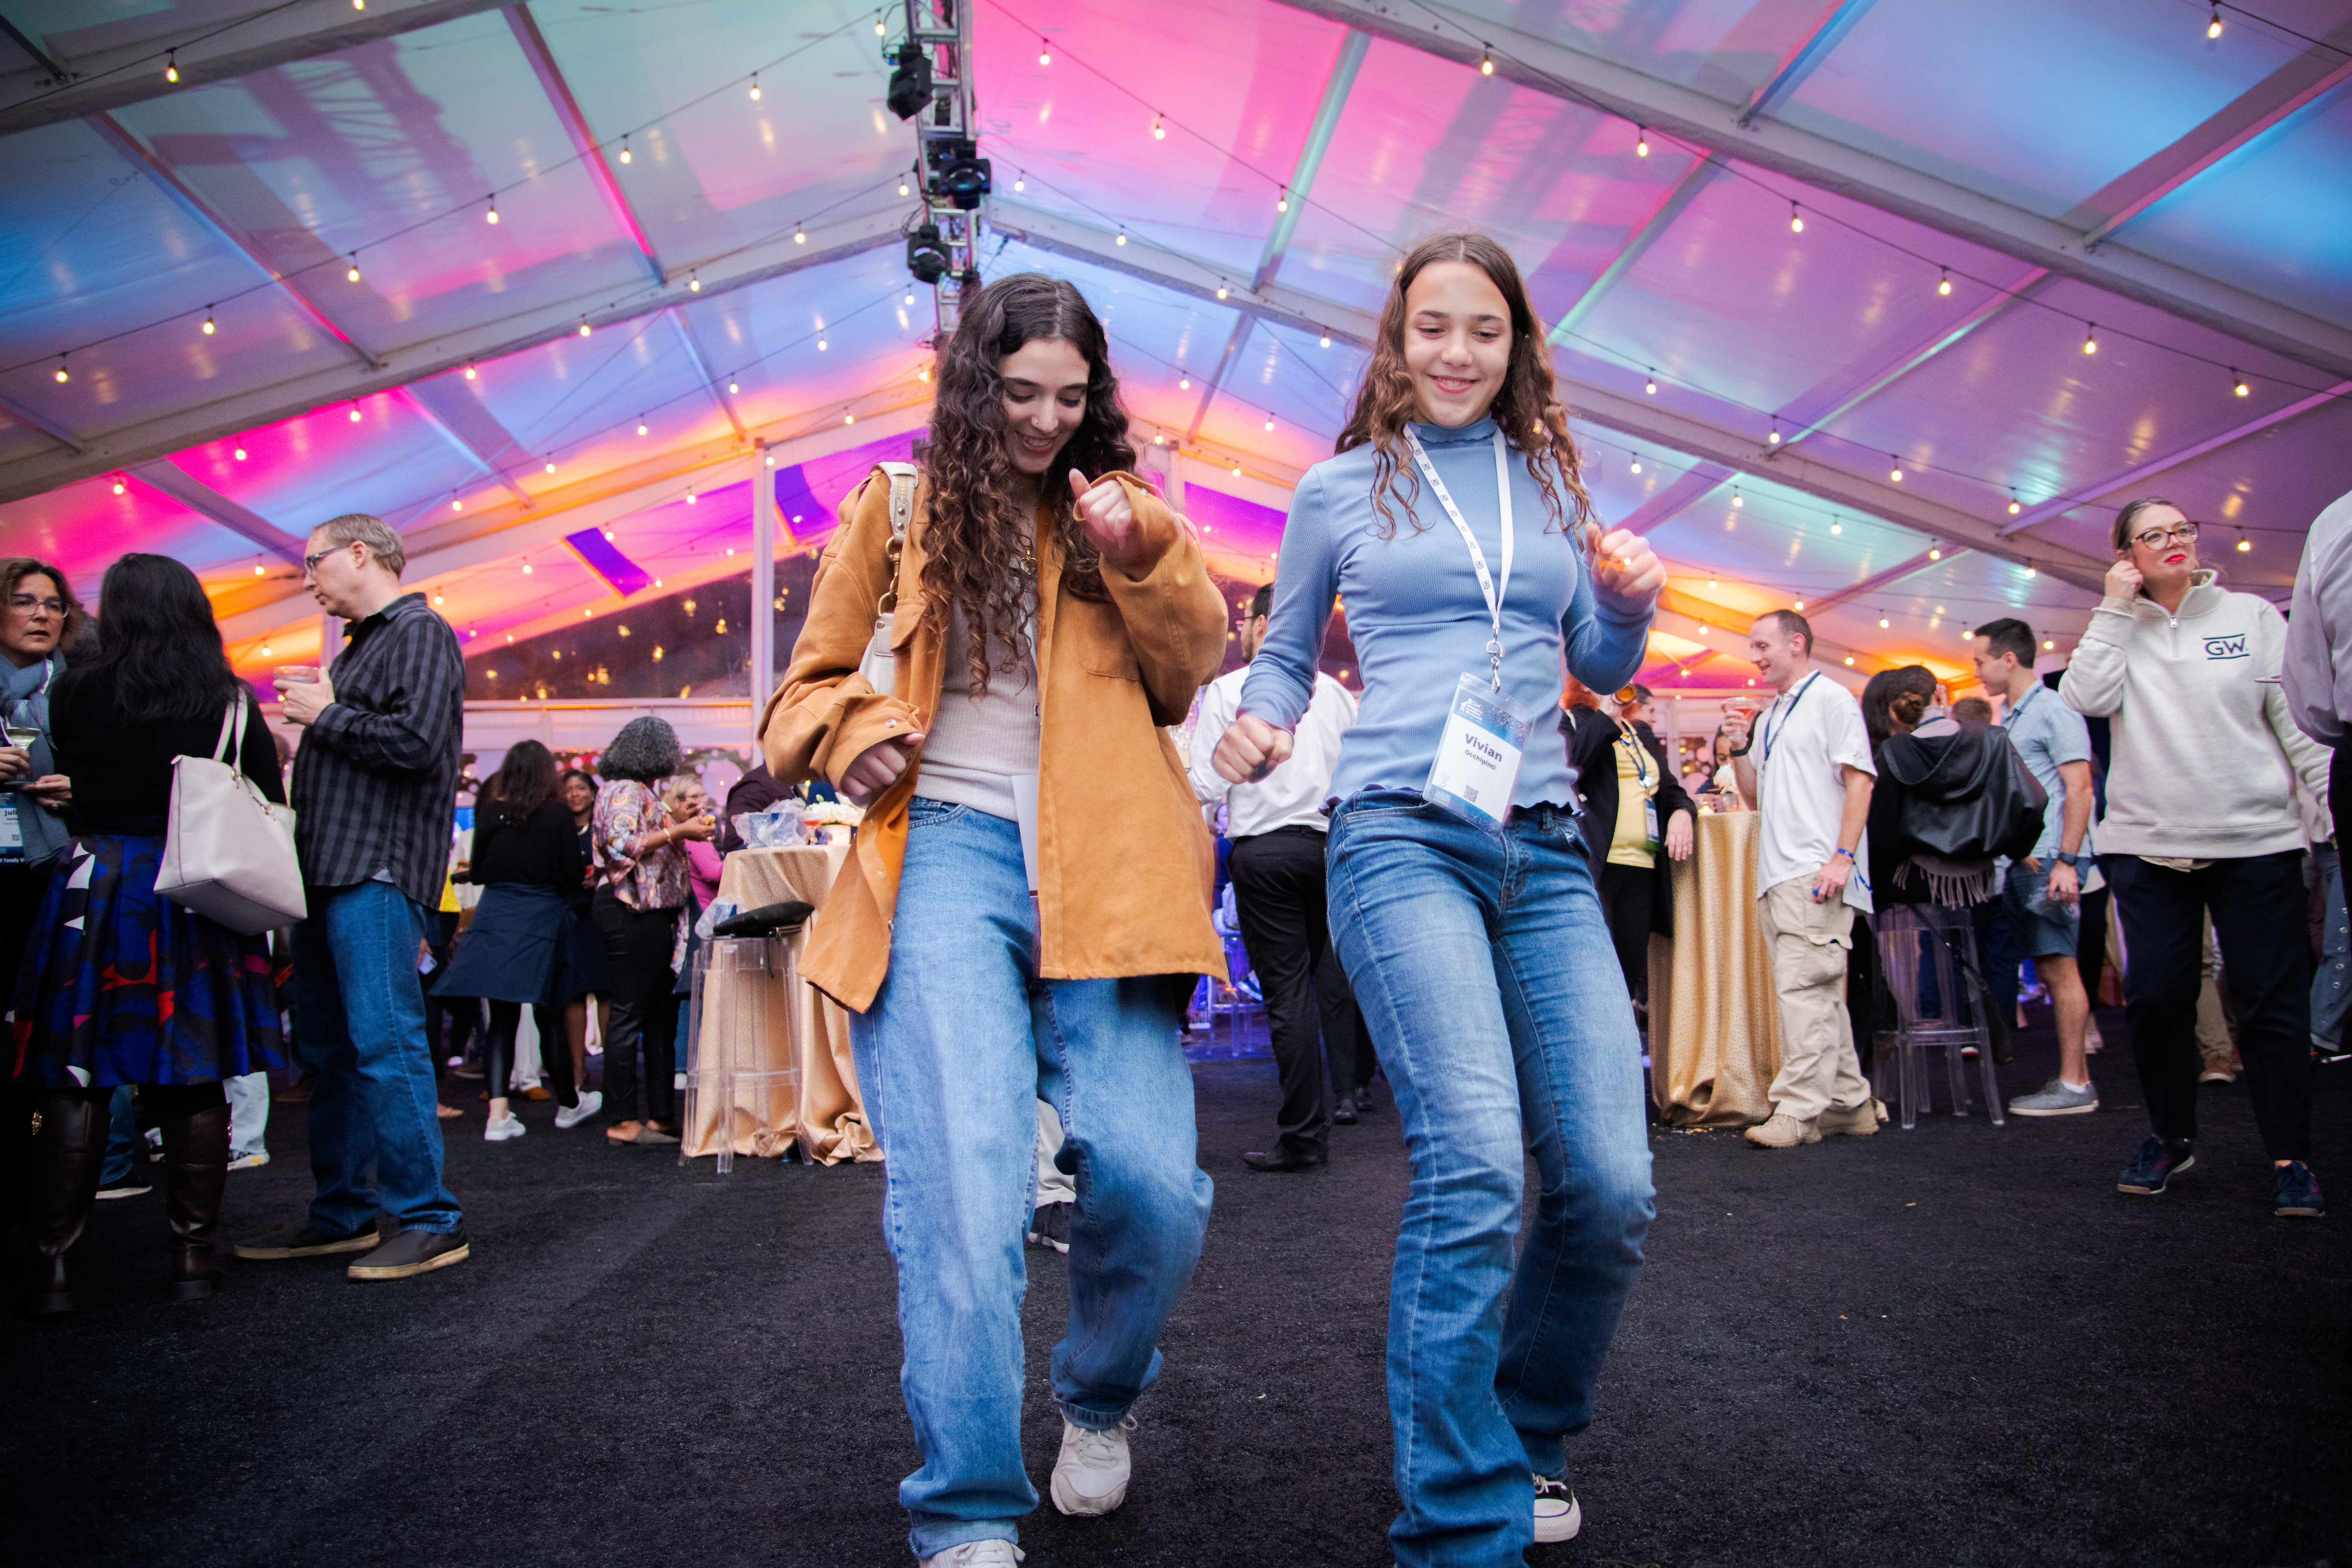 Two women dancing in a tent